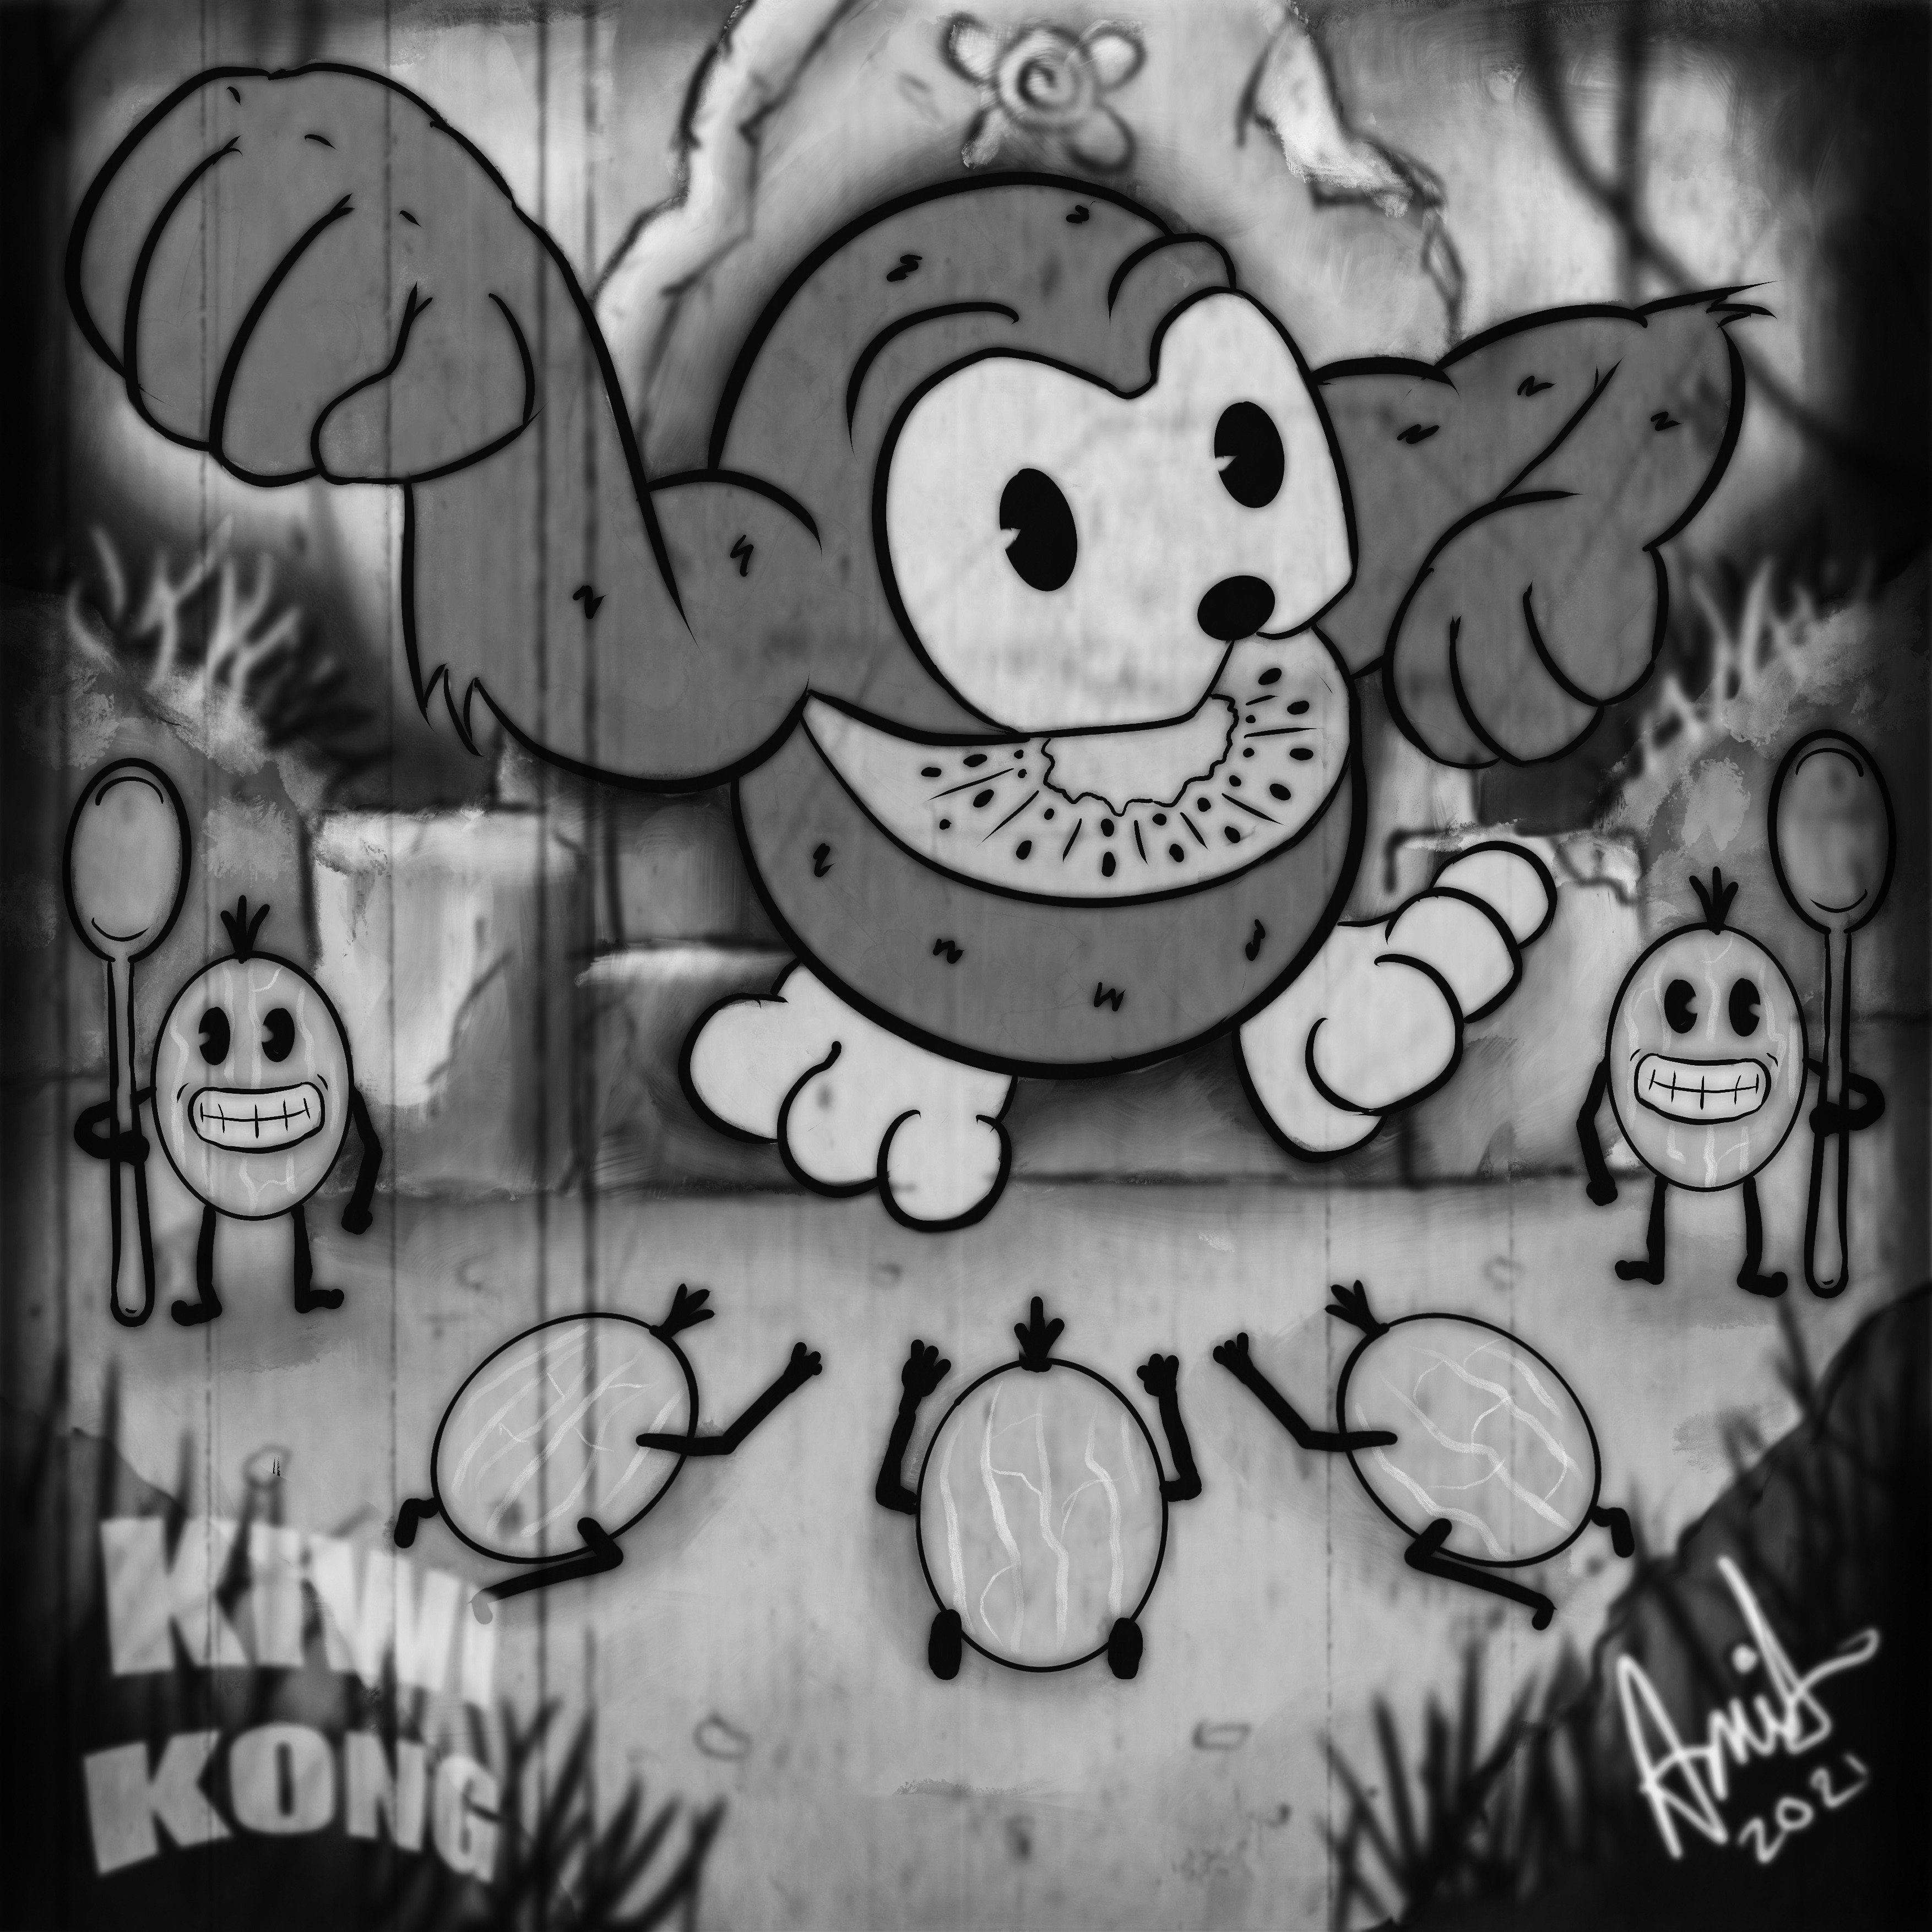 Kiwi Kong in black and white